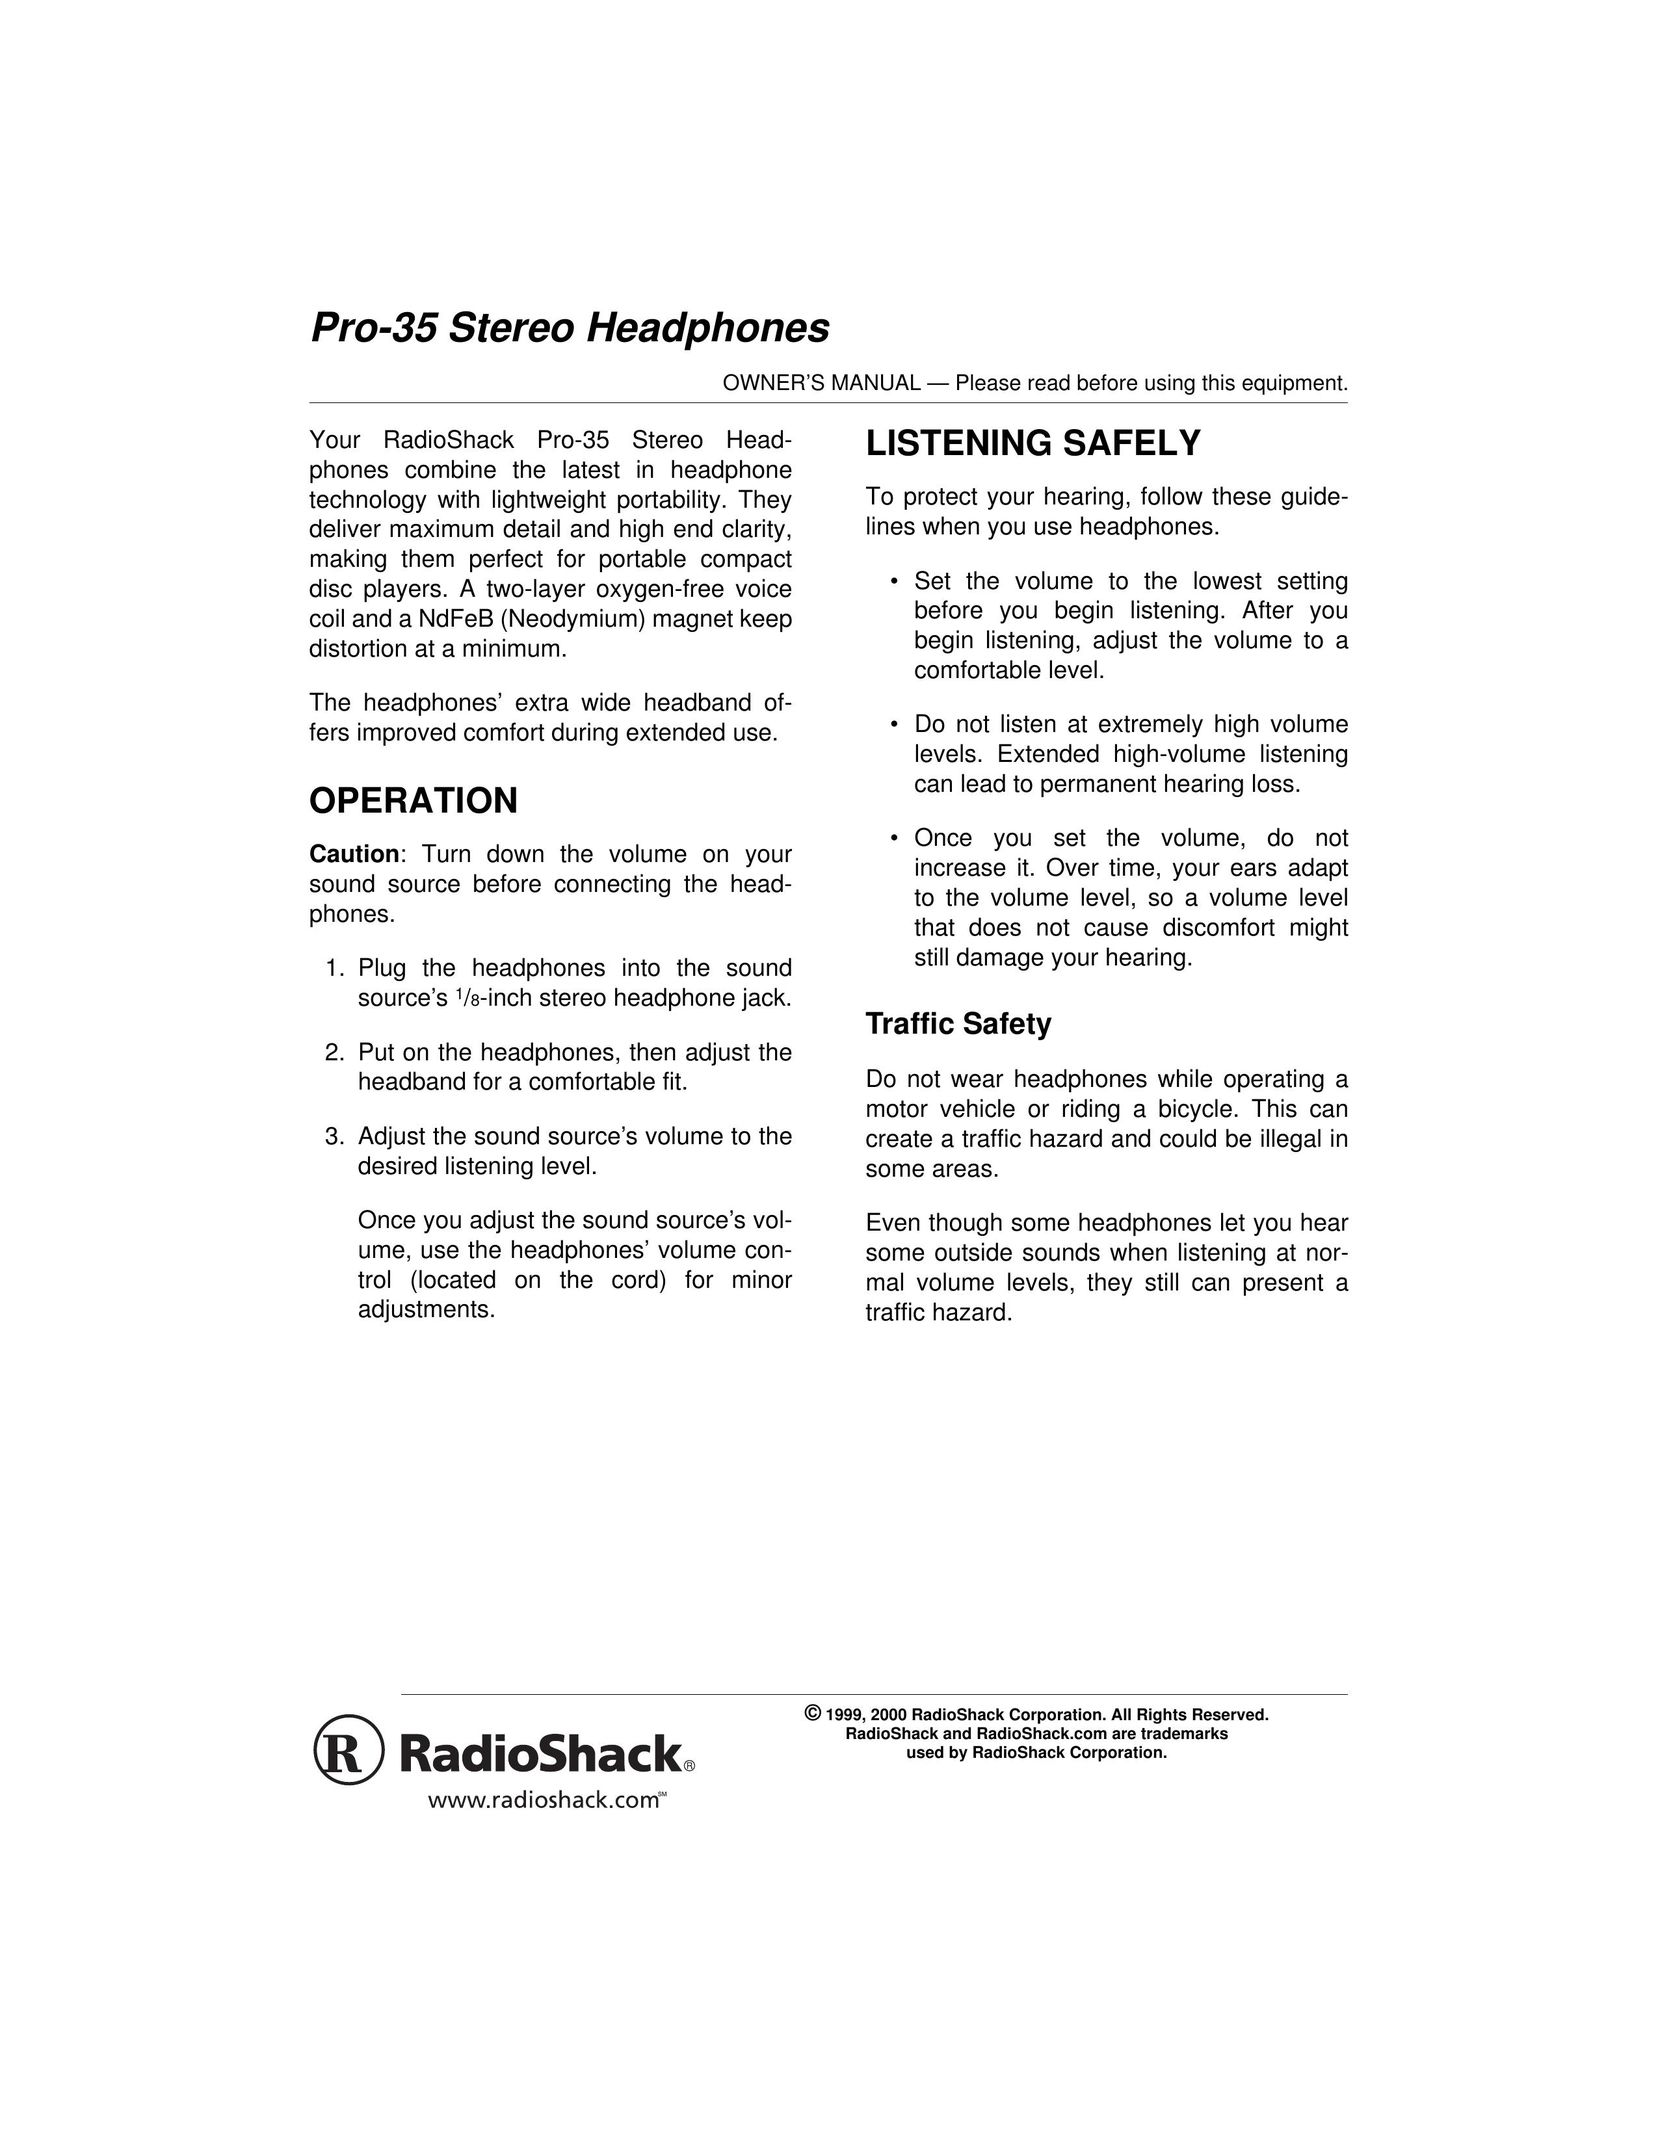 Blackberry PRO-35 Headphones User Manual